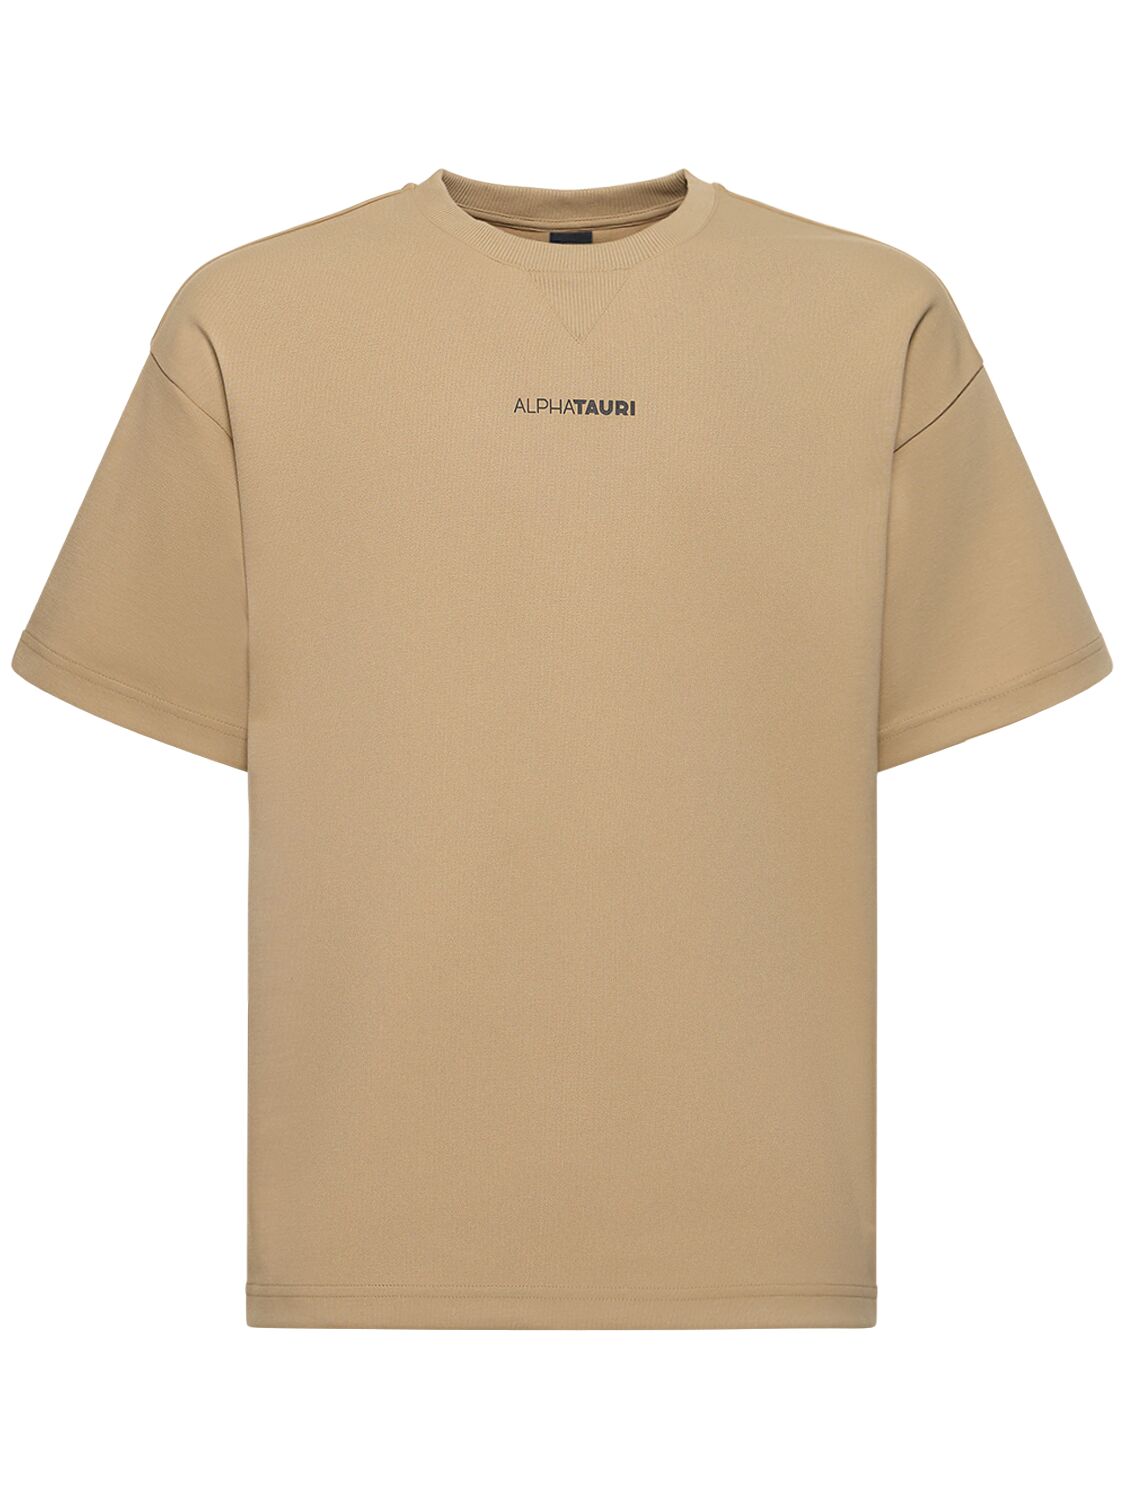 ALPHATAURI Cotton Blend T-shirt